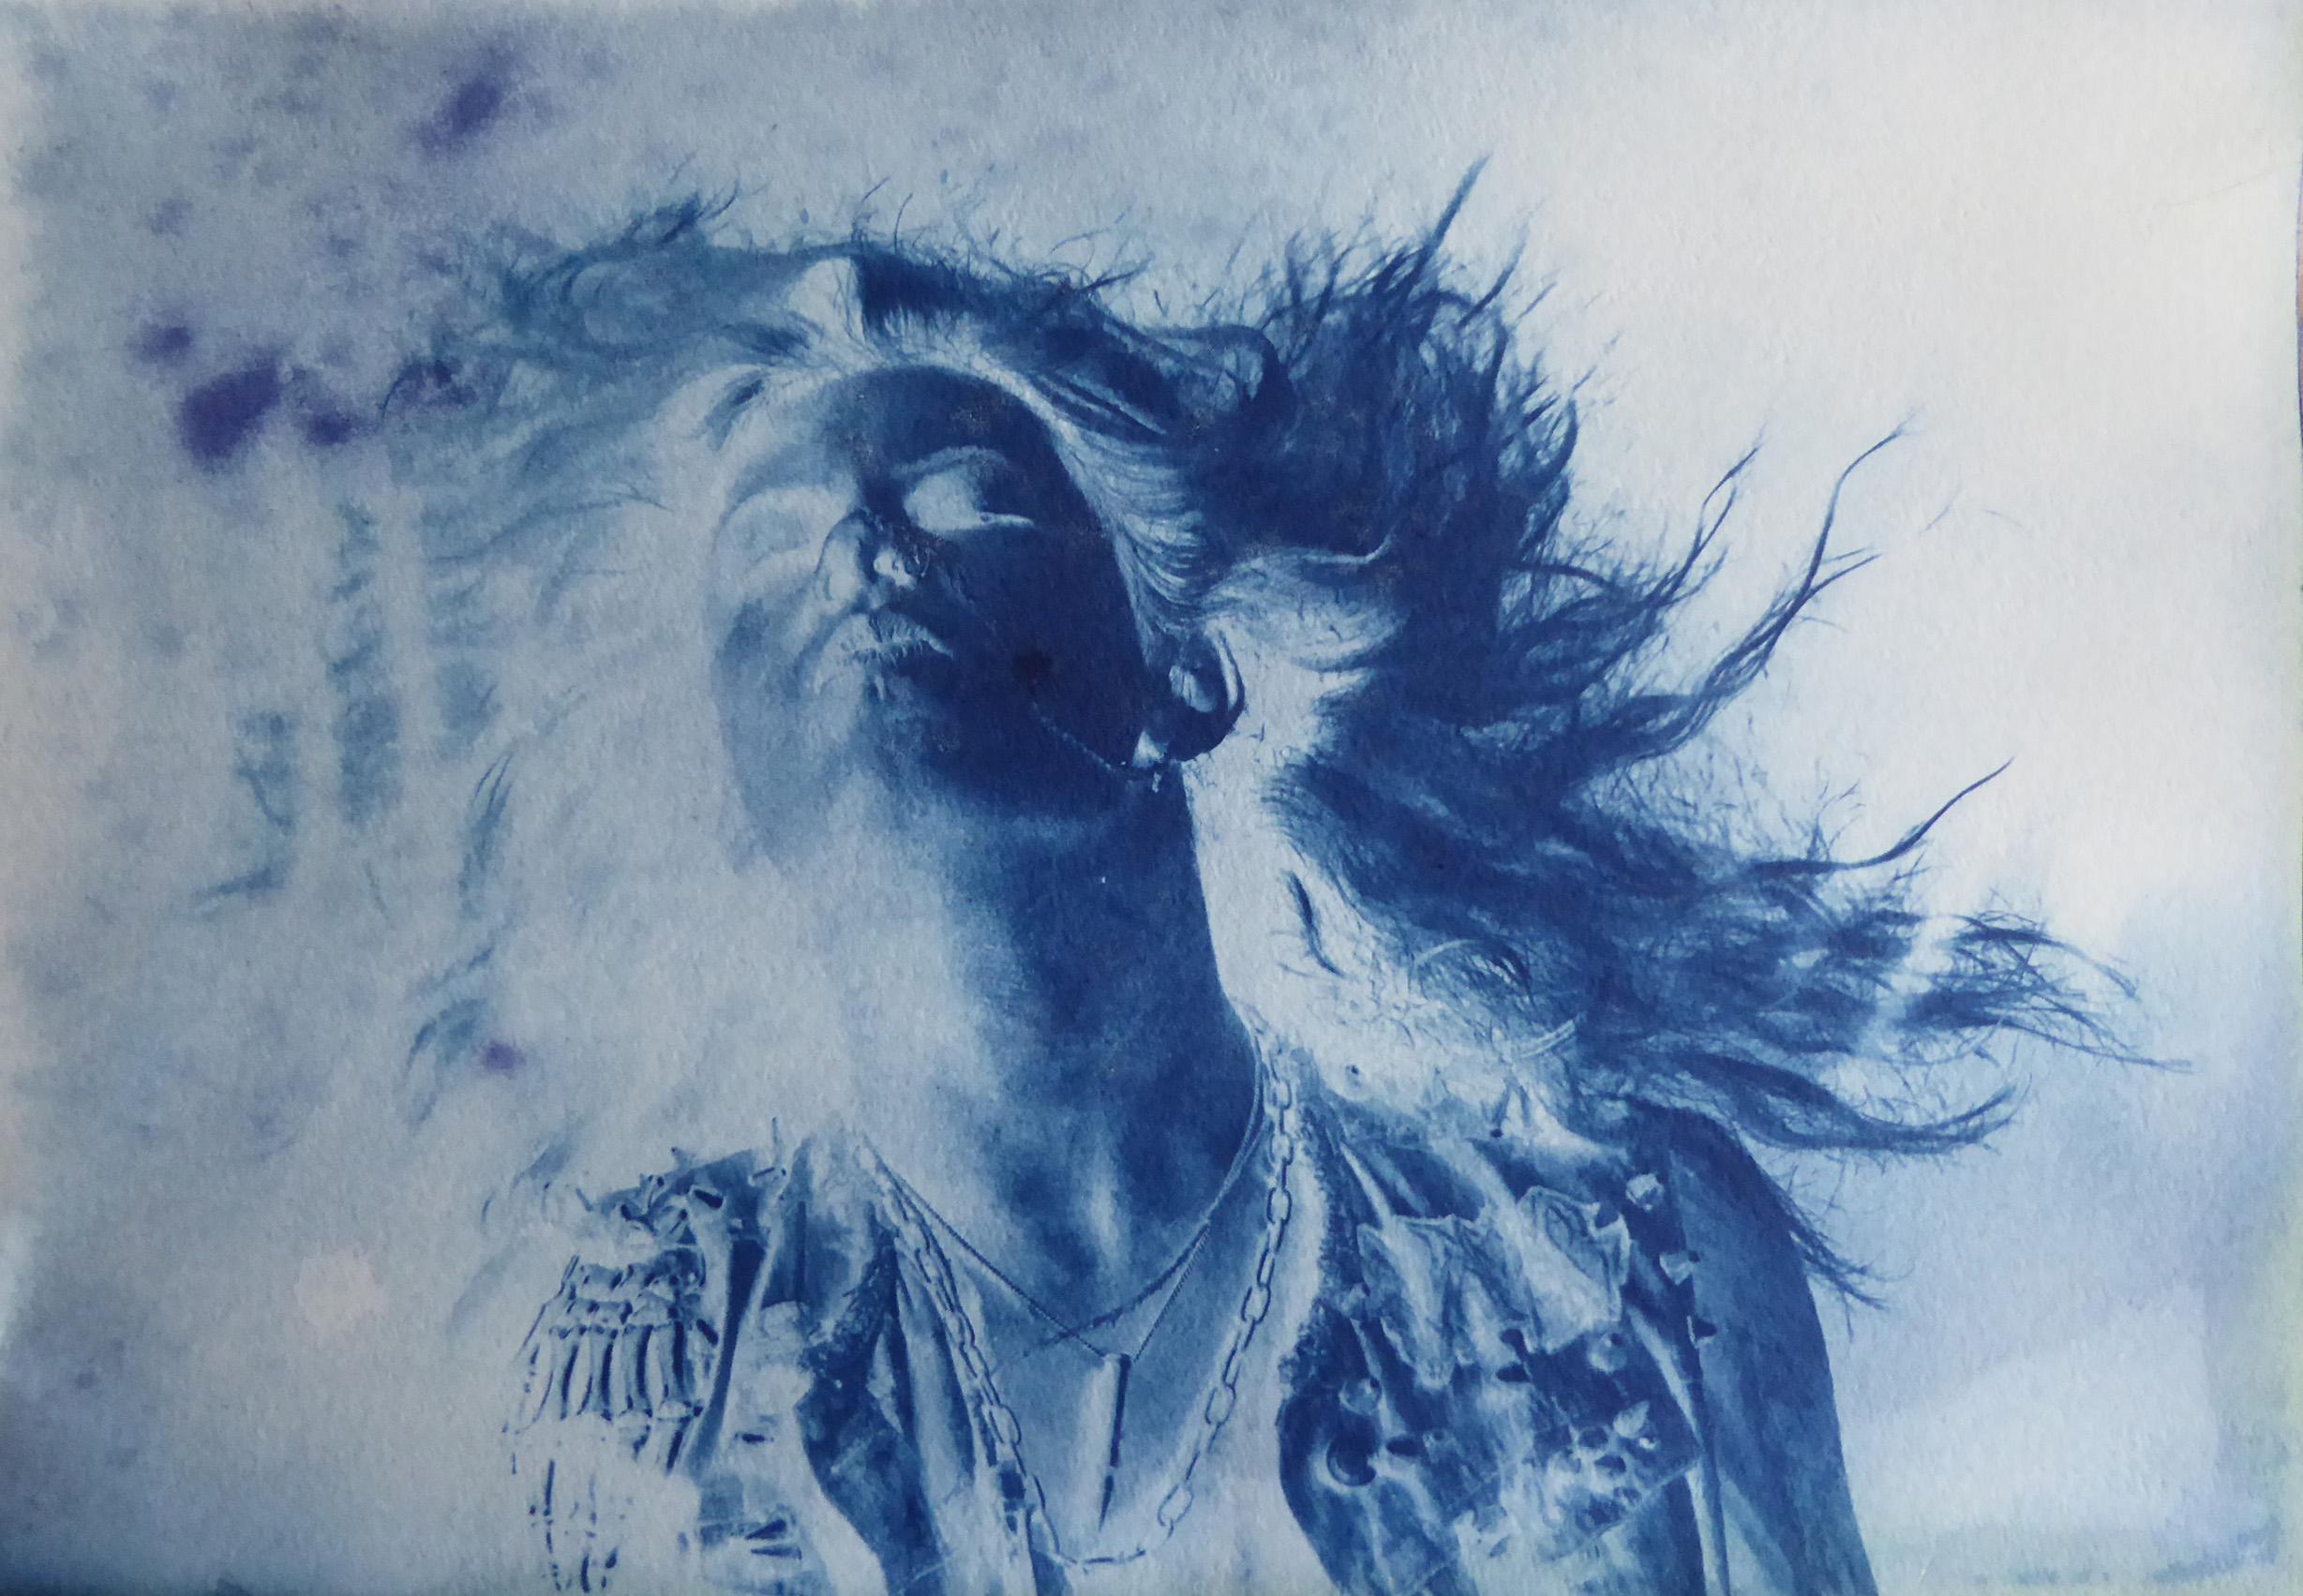 Cyanotype image of nu-metal musician